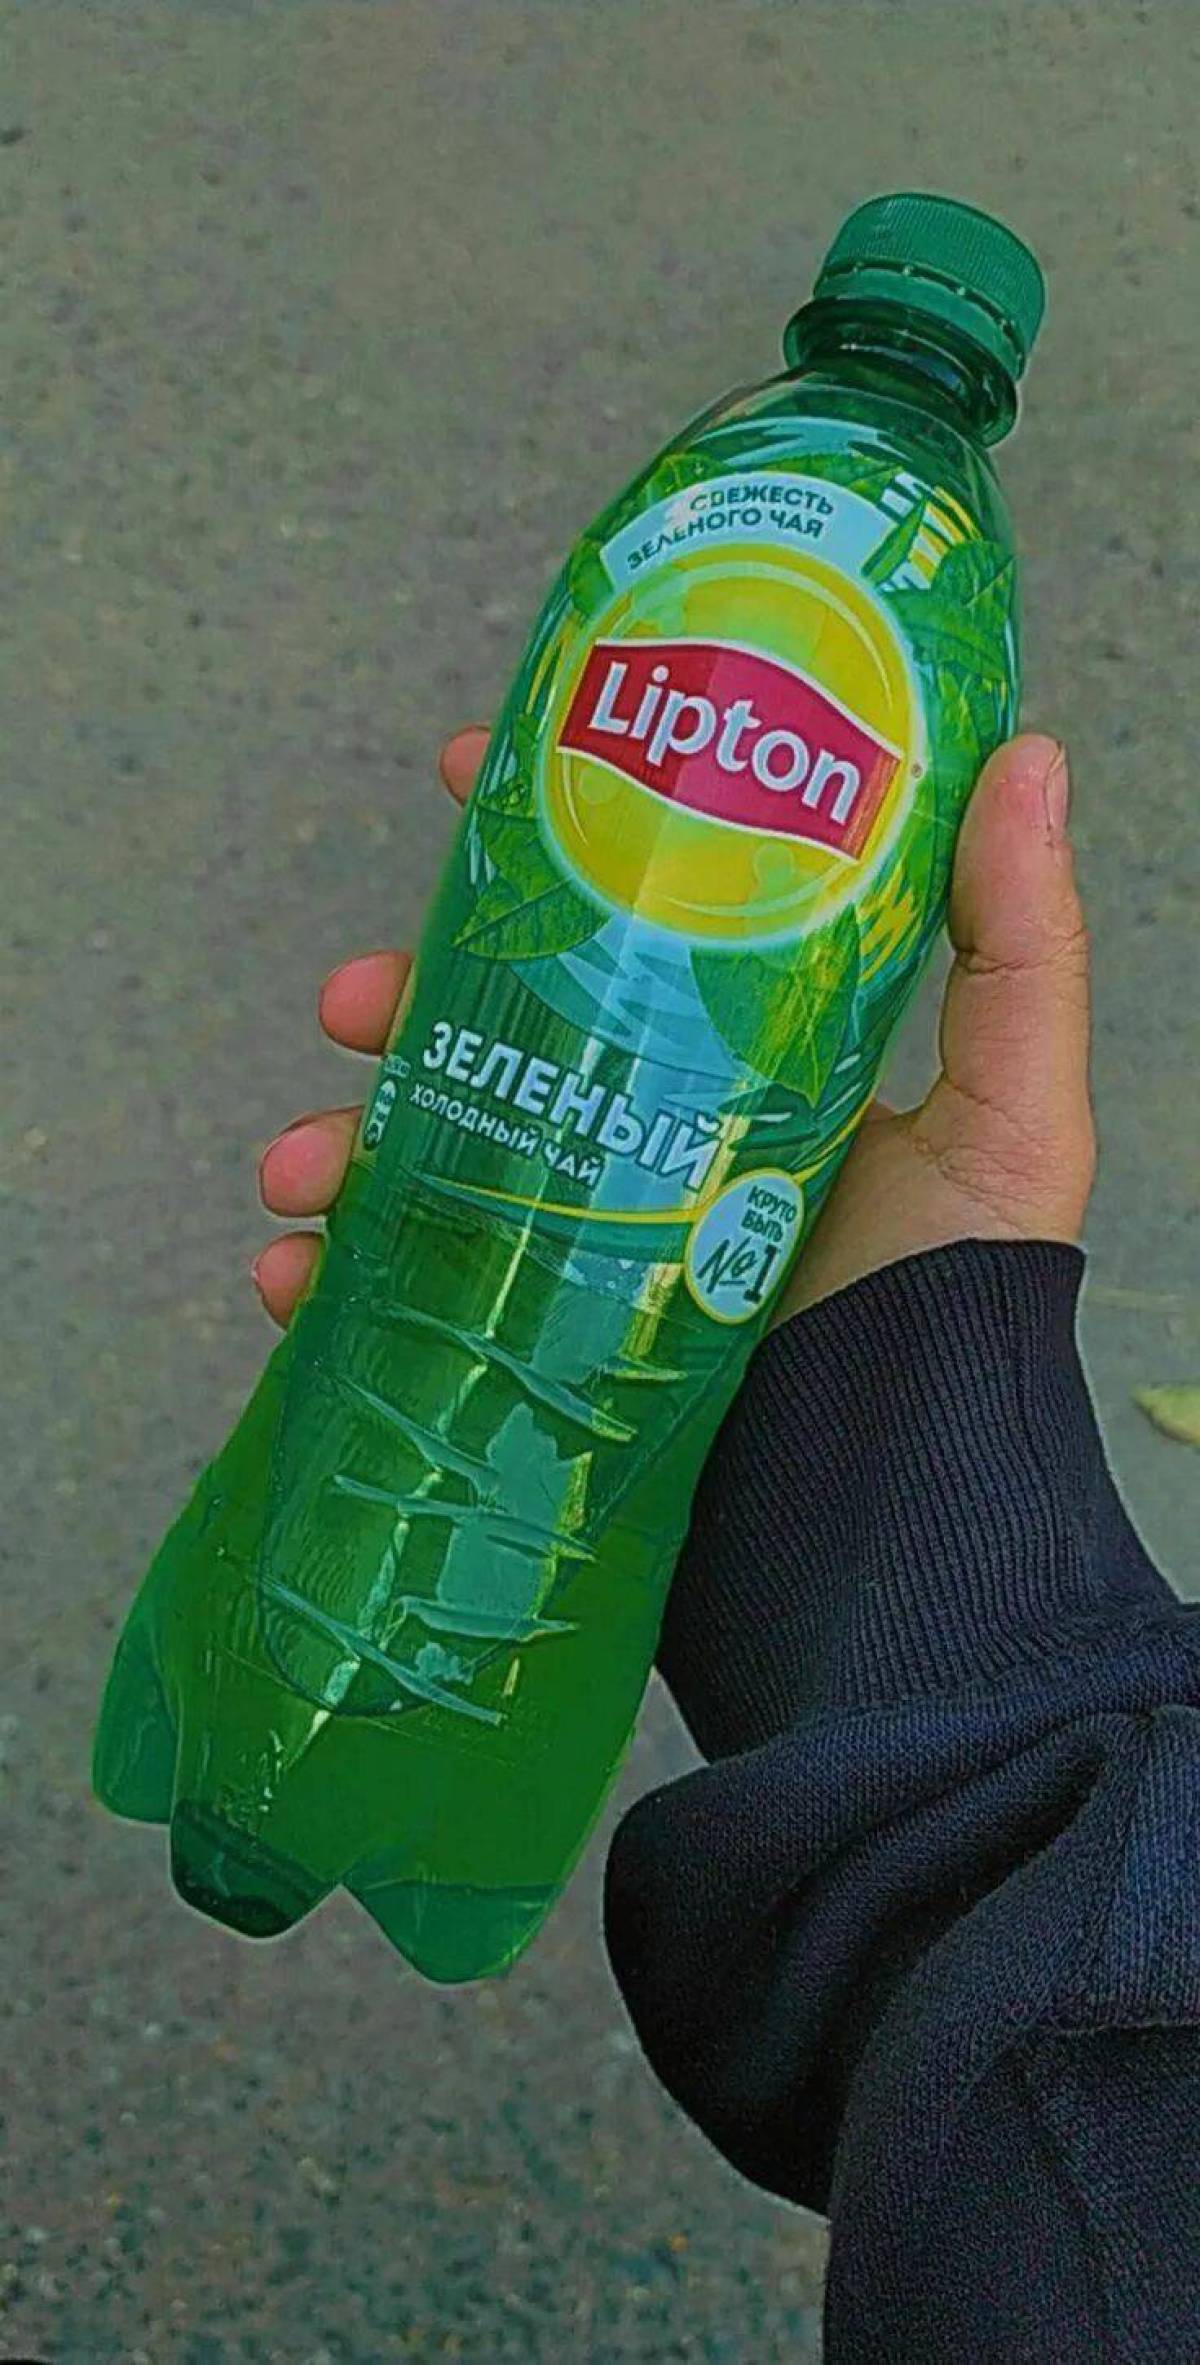 Бутылка зеленого липтона. Инди КИД Липтон. Зеленый Липтон в бутылке Эстетика. Напиток Липтон зеленый Эстетик. Липтон зелёный чай в бутылке.